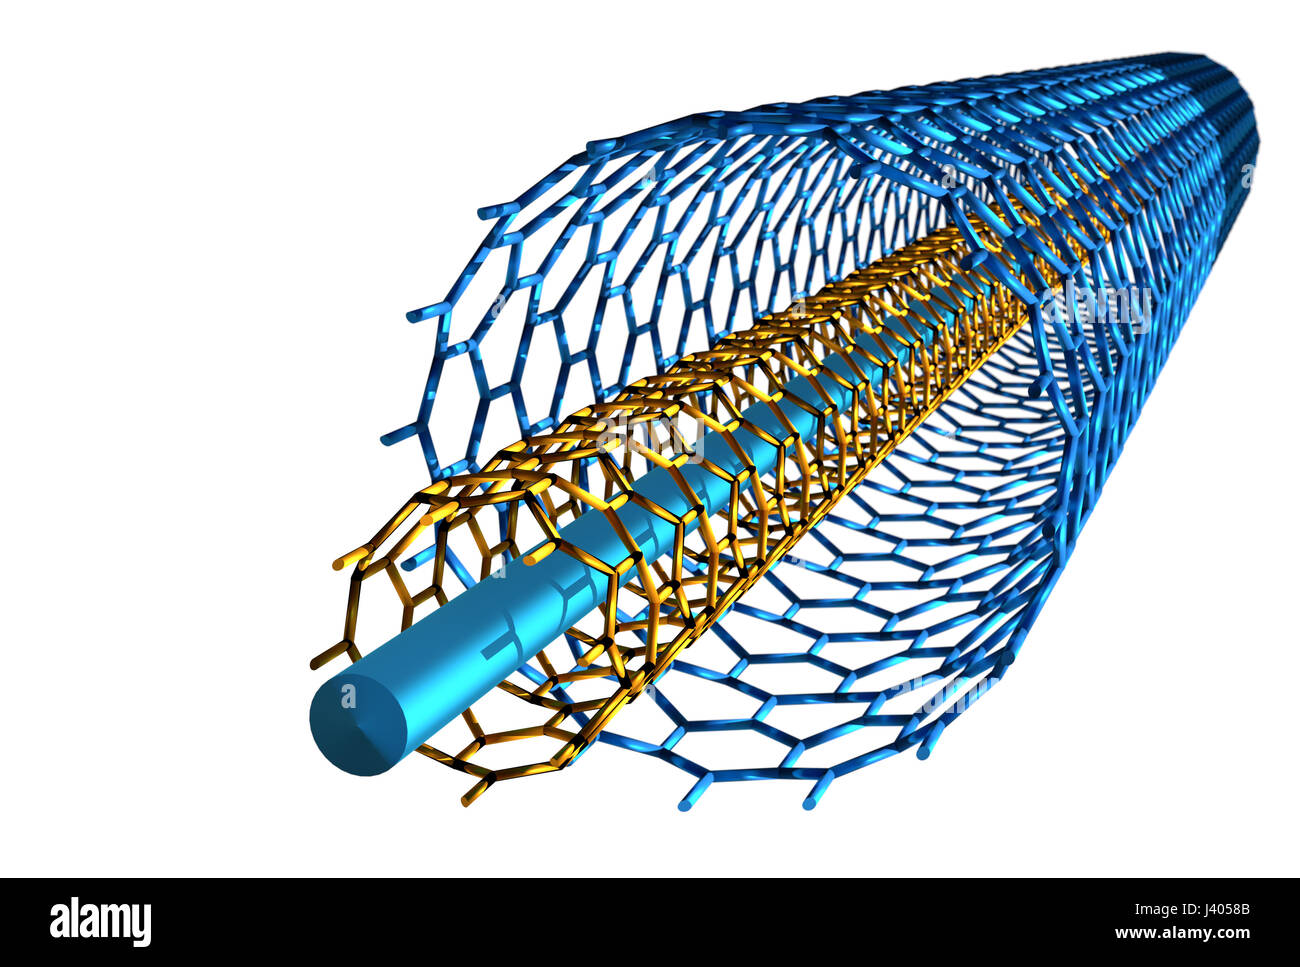 Straight Carbon Nanotubes, Blue and Orange Tubes Stock Photo